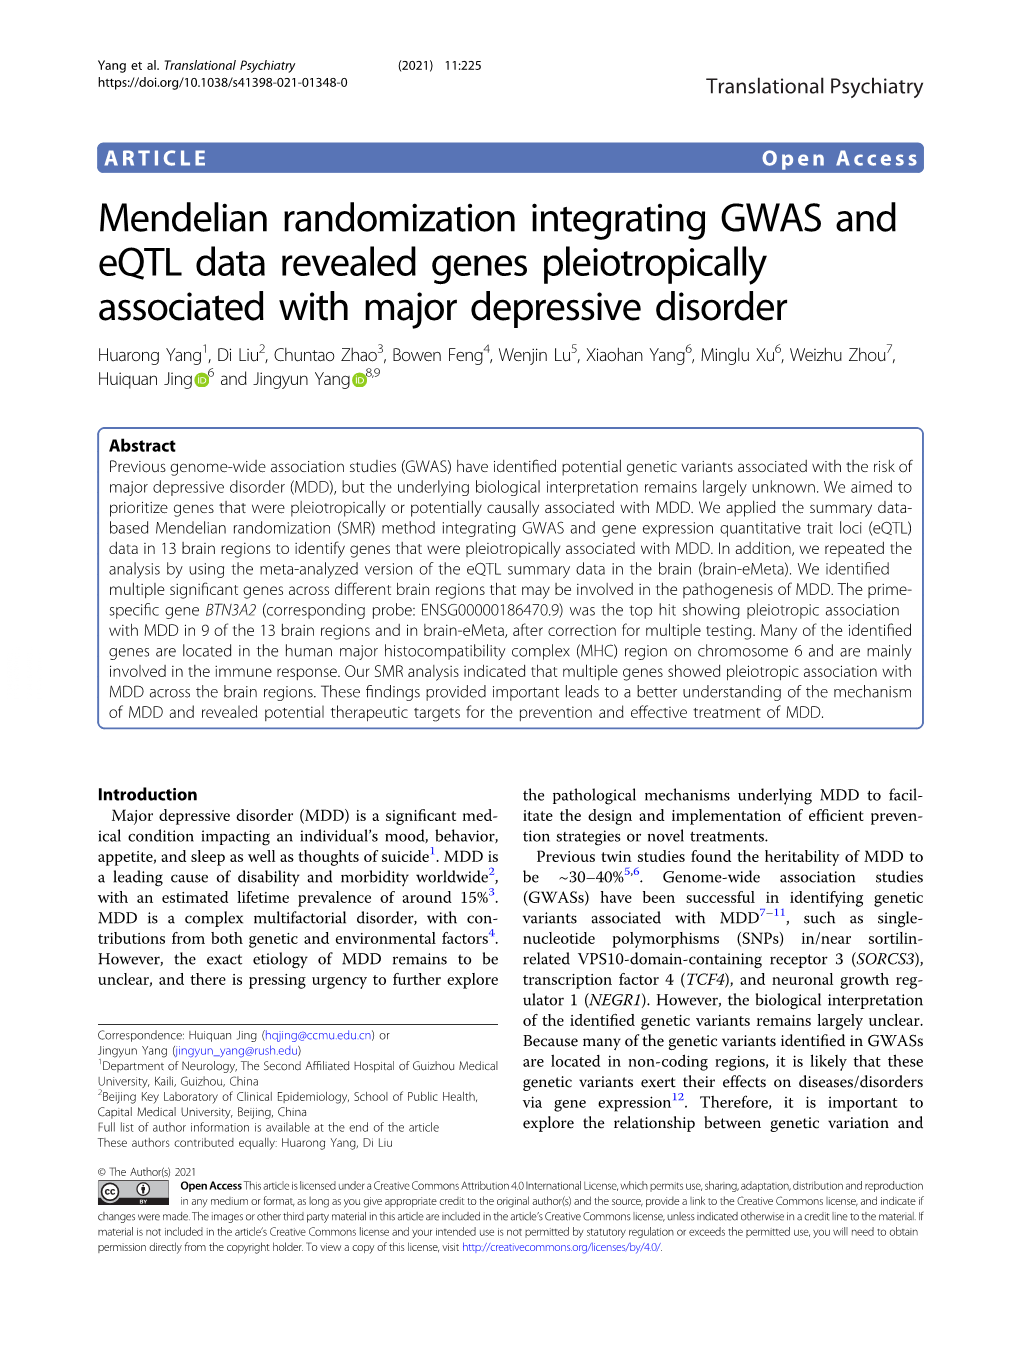 Mendelian Randomization Integrating GWAS and Eqtl Data Revealed